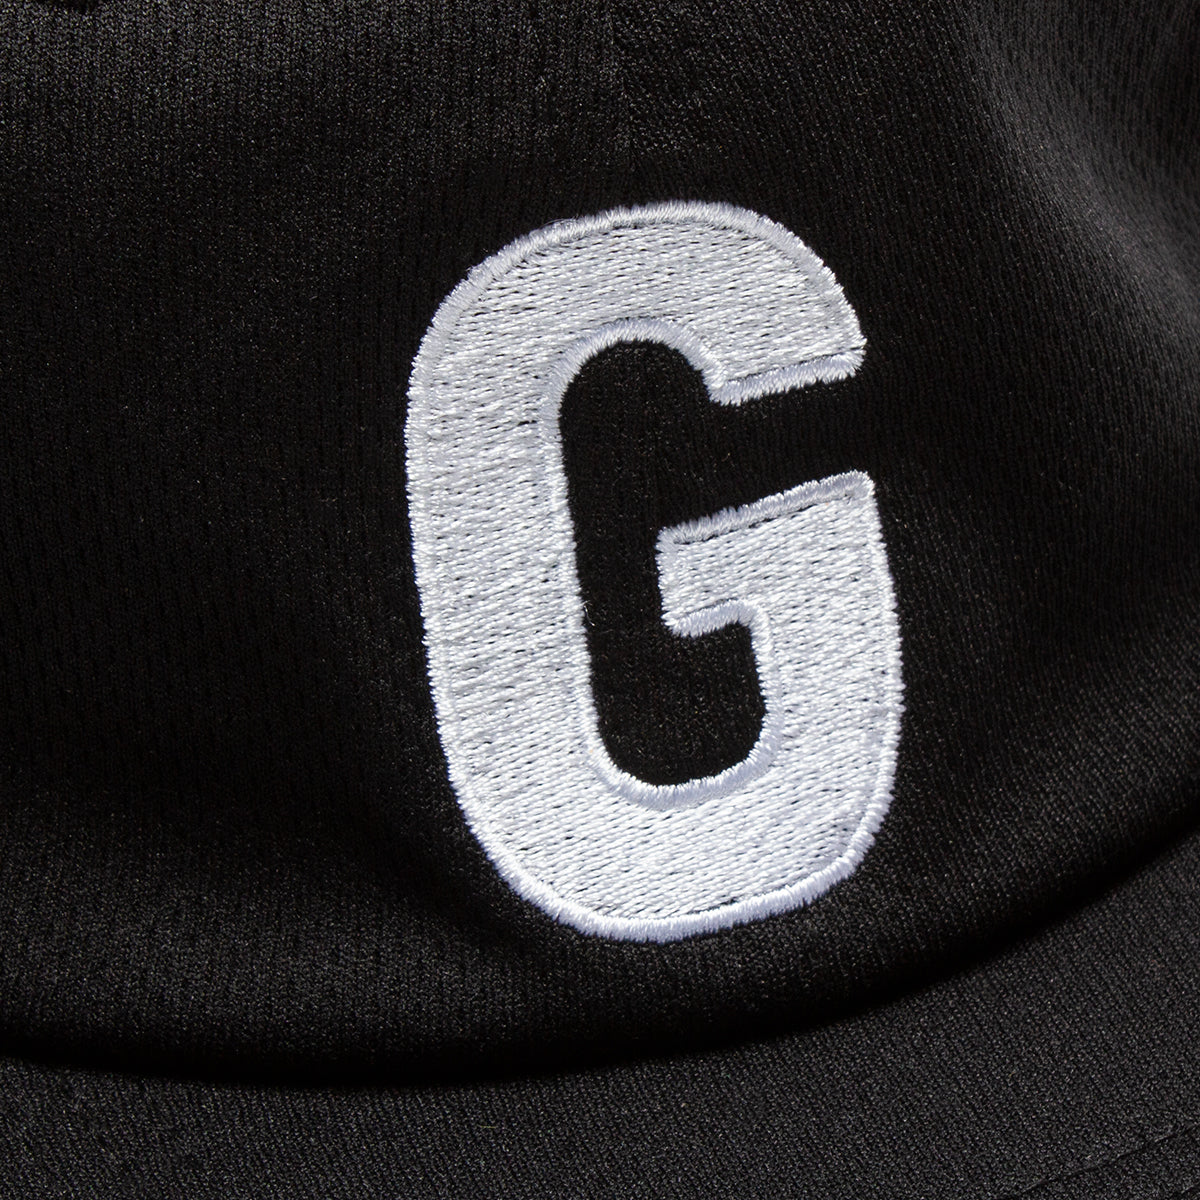 GX1000 'G' 5 Panel Hat Color : Black